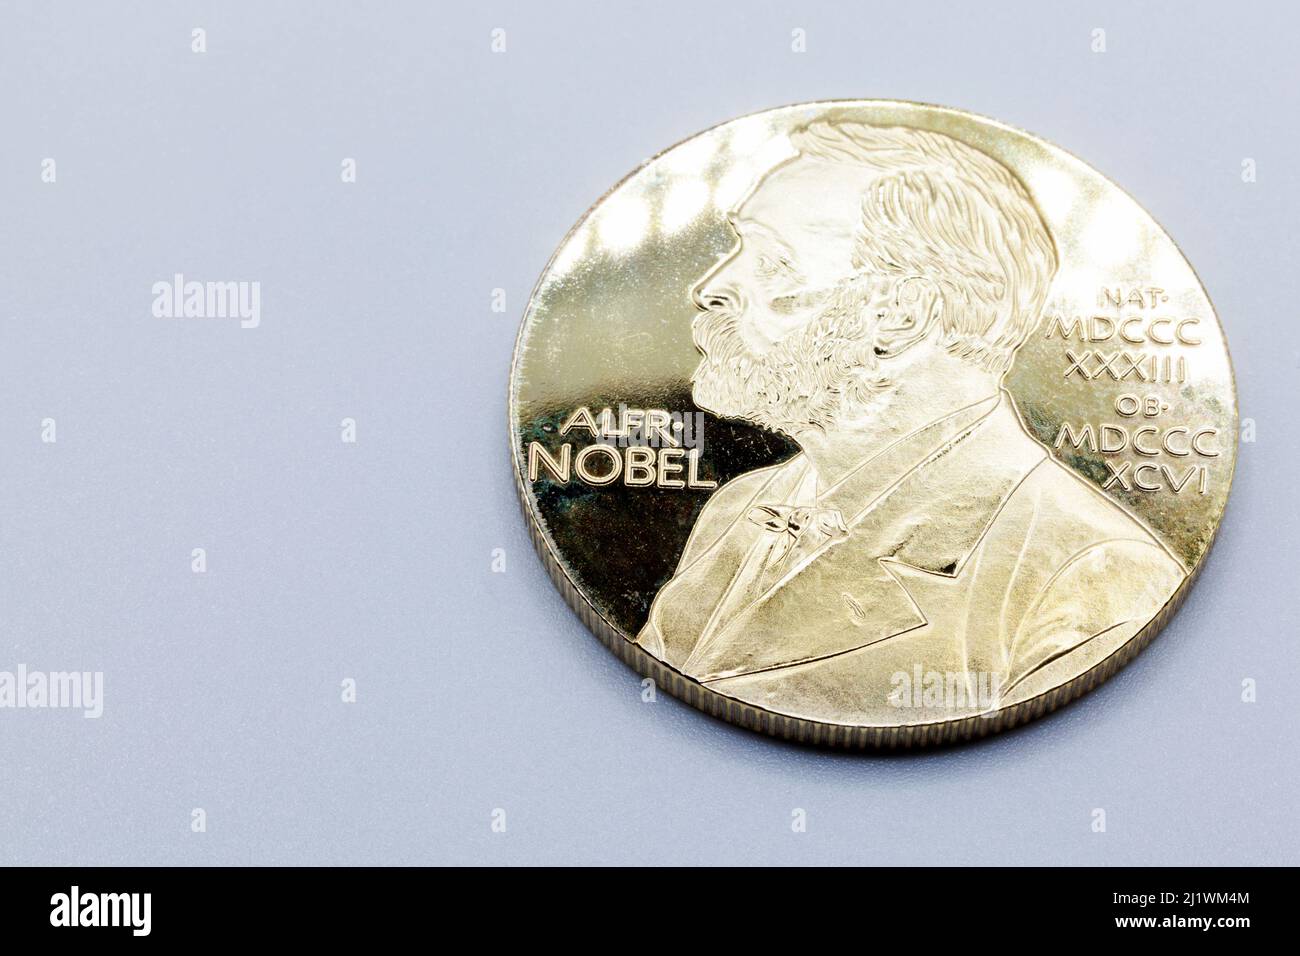 Replik des Nobelpreises auf grauem Hintergrund Stockfoto